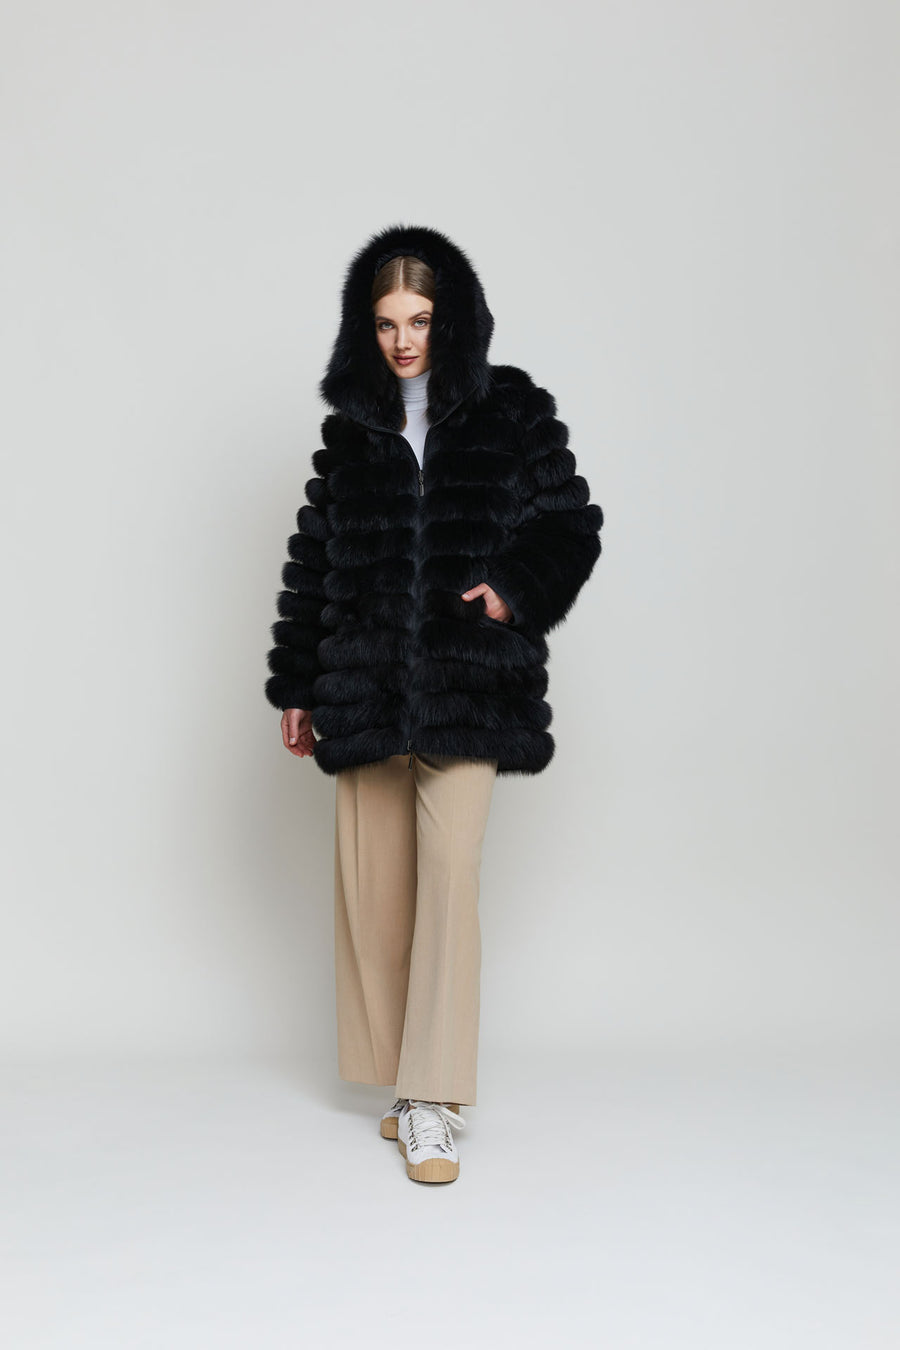 Gemmi women's black fur coat made from Saga quality Finnish farmed fox fur sourced 